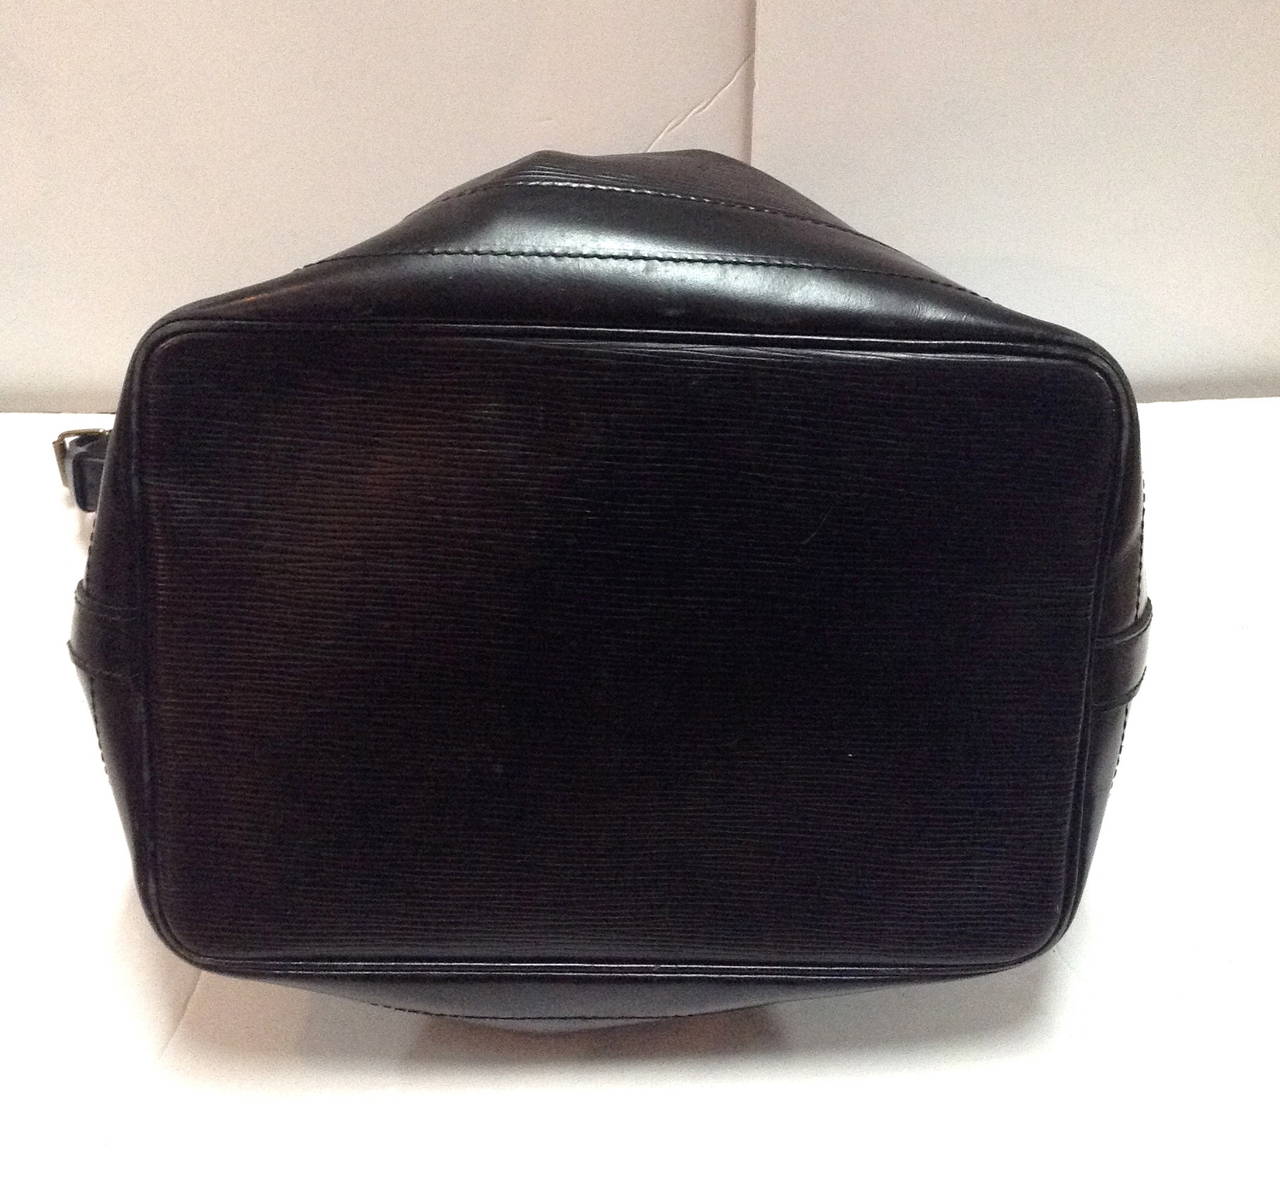 1990 Louis Vuitton Black Epi Leather Noe Bag Gm Retail $2200 For Sale 1